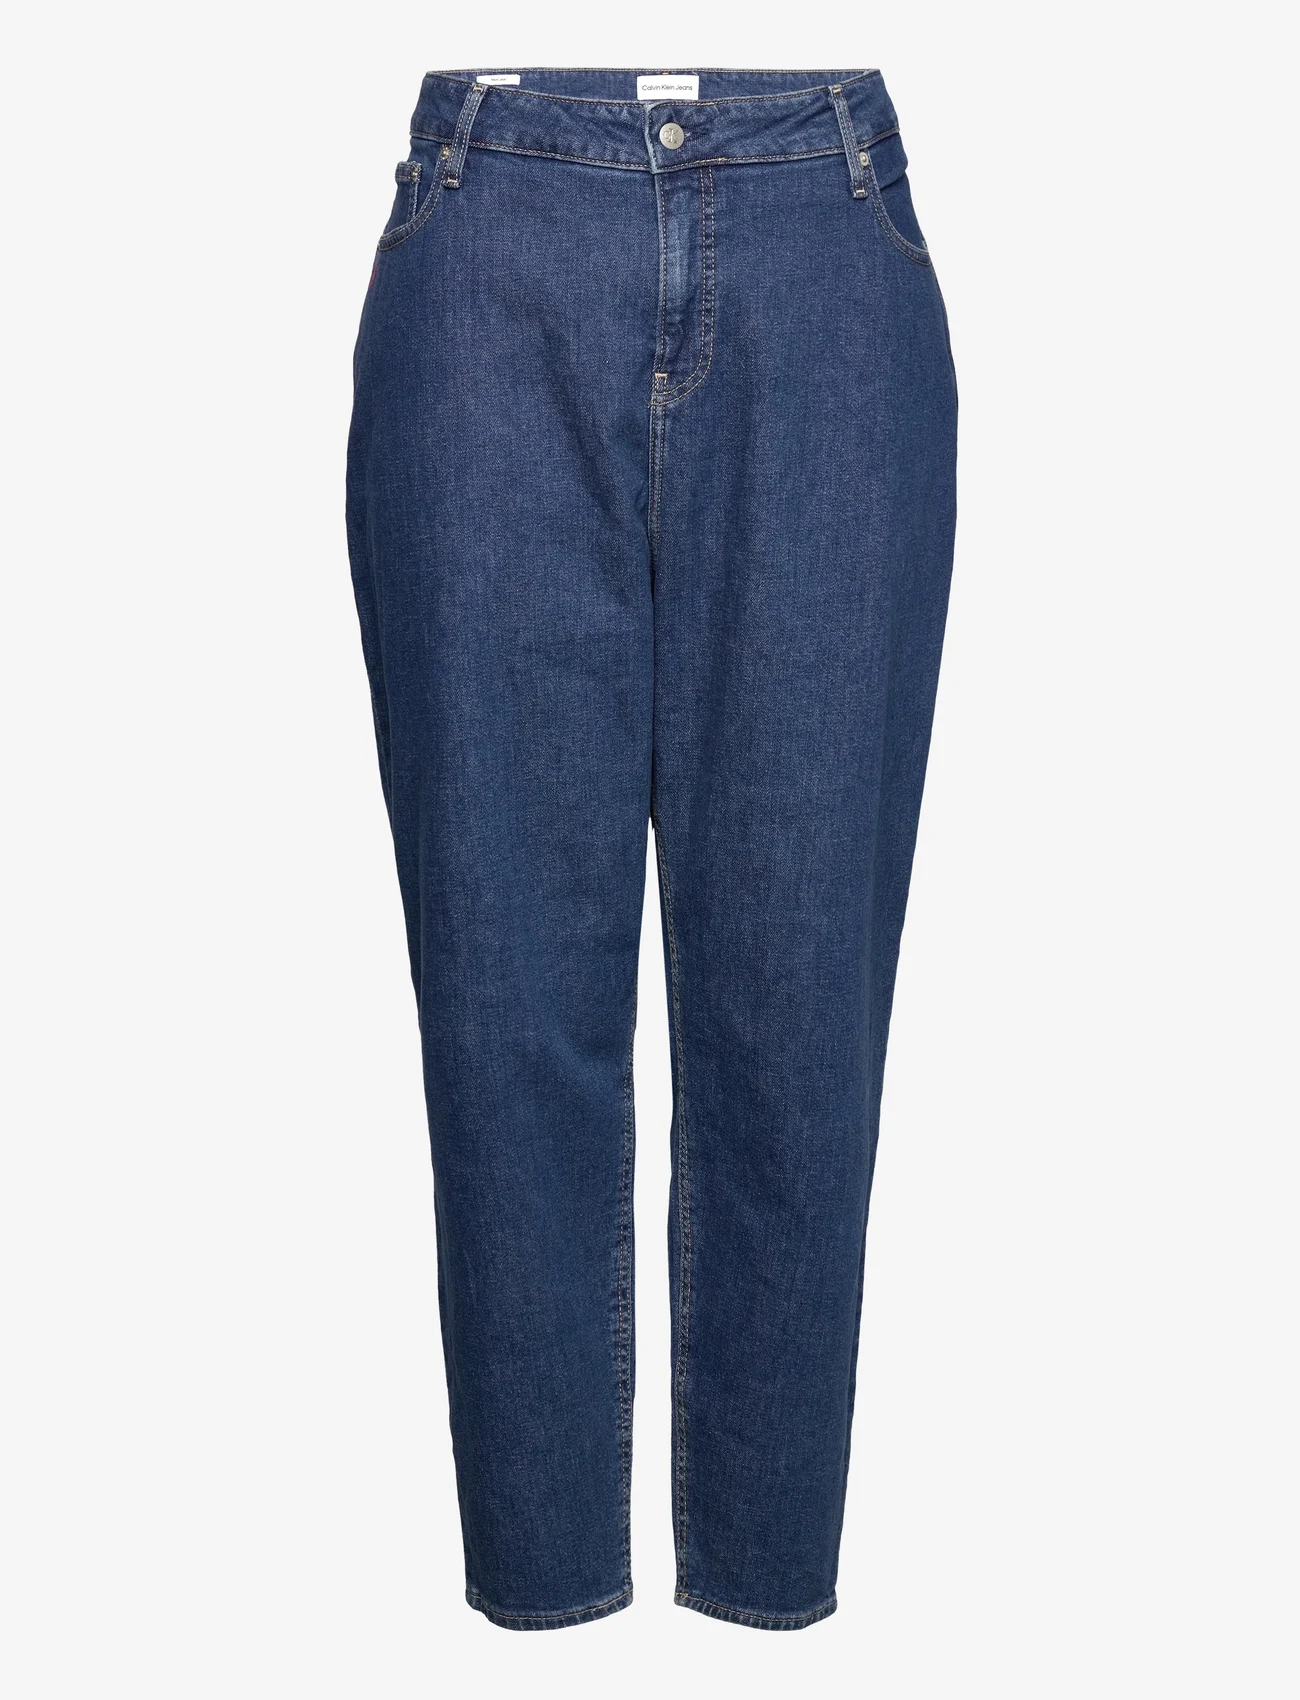 Calvin Klein Jeans - MOM JEAN PLUS - mom jeans - denim medium - 0